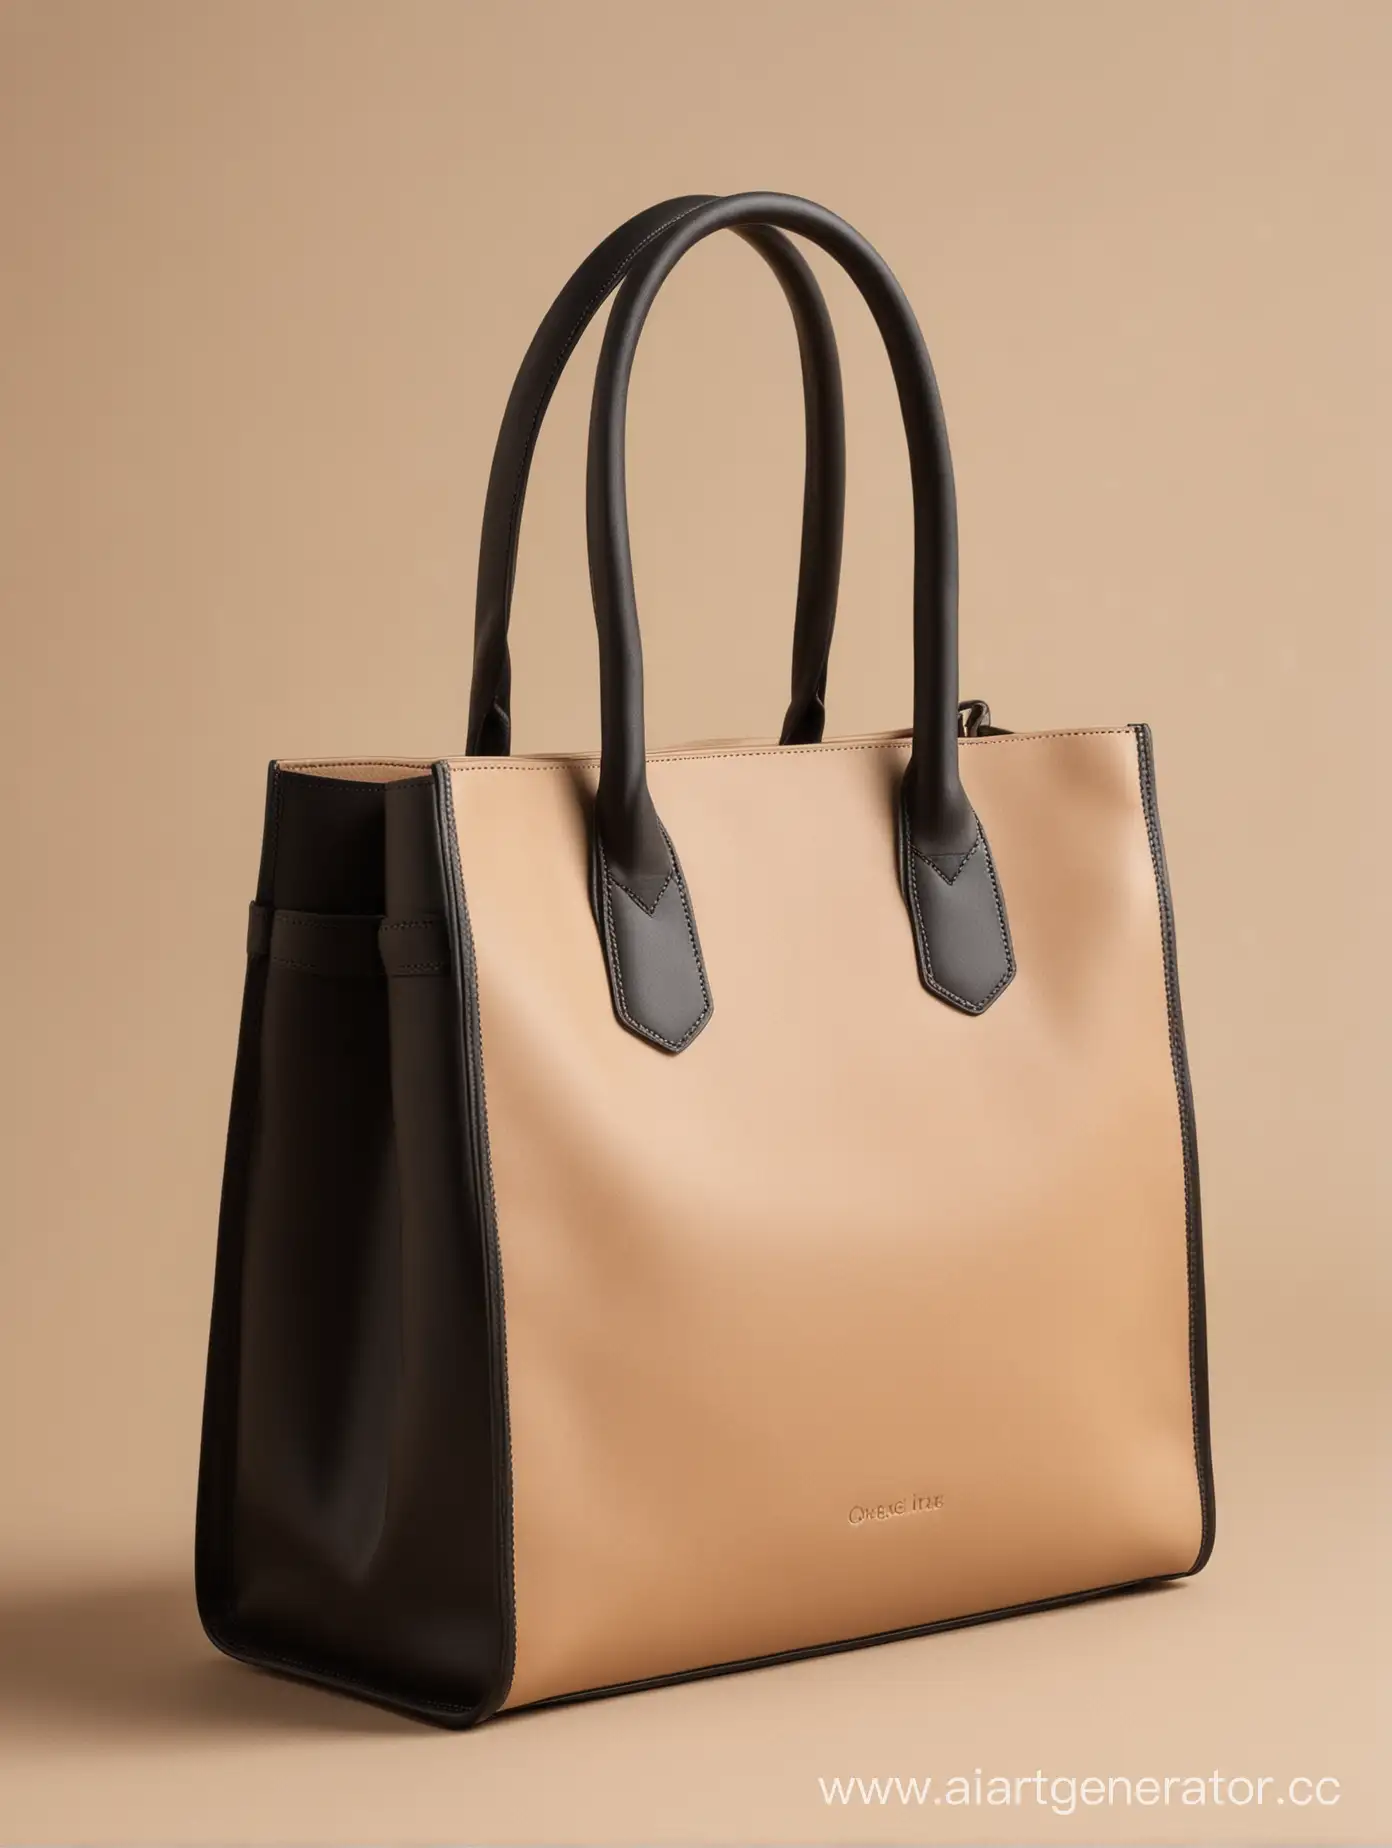 Elegant-MediumSized-Black-Bag-on-CoffeeBeige-Background